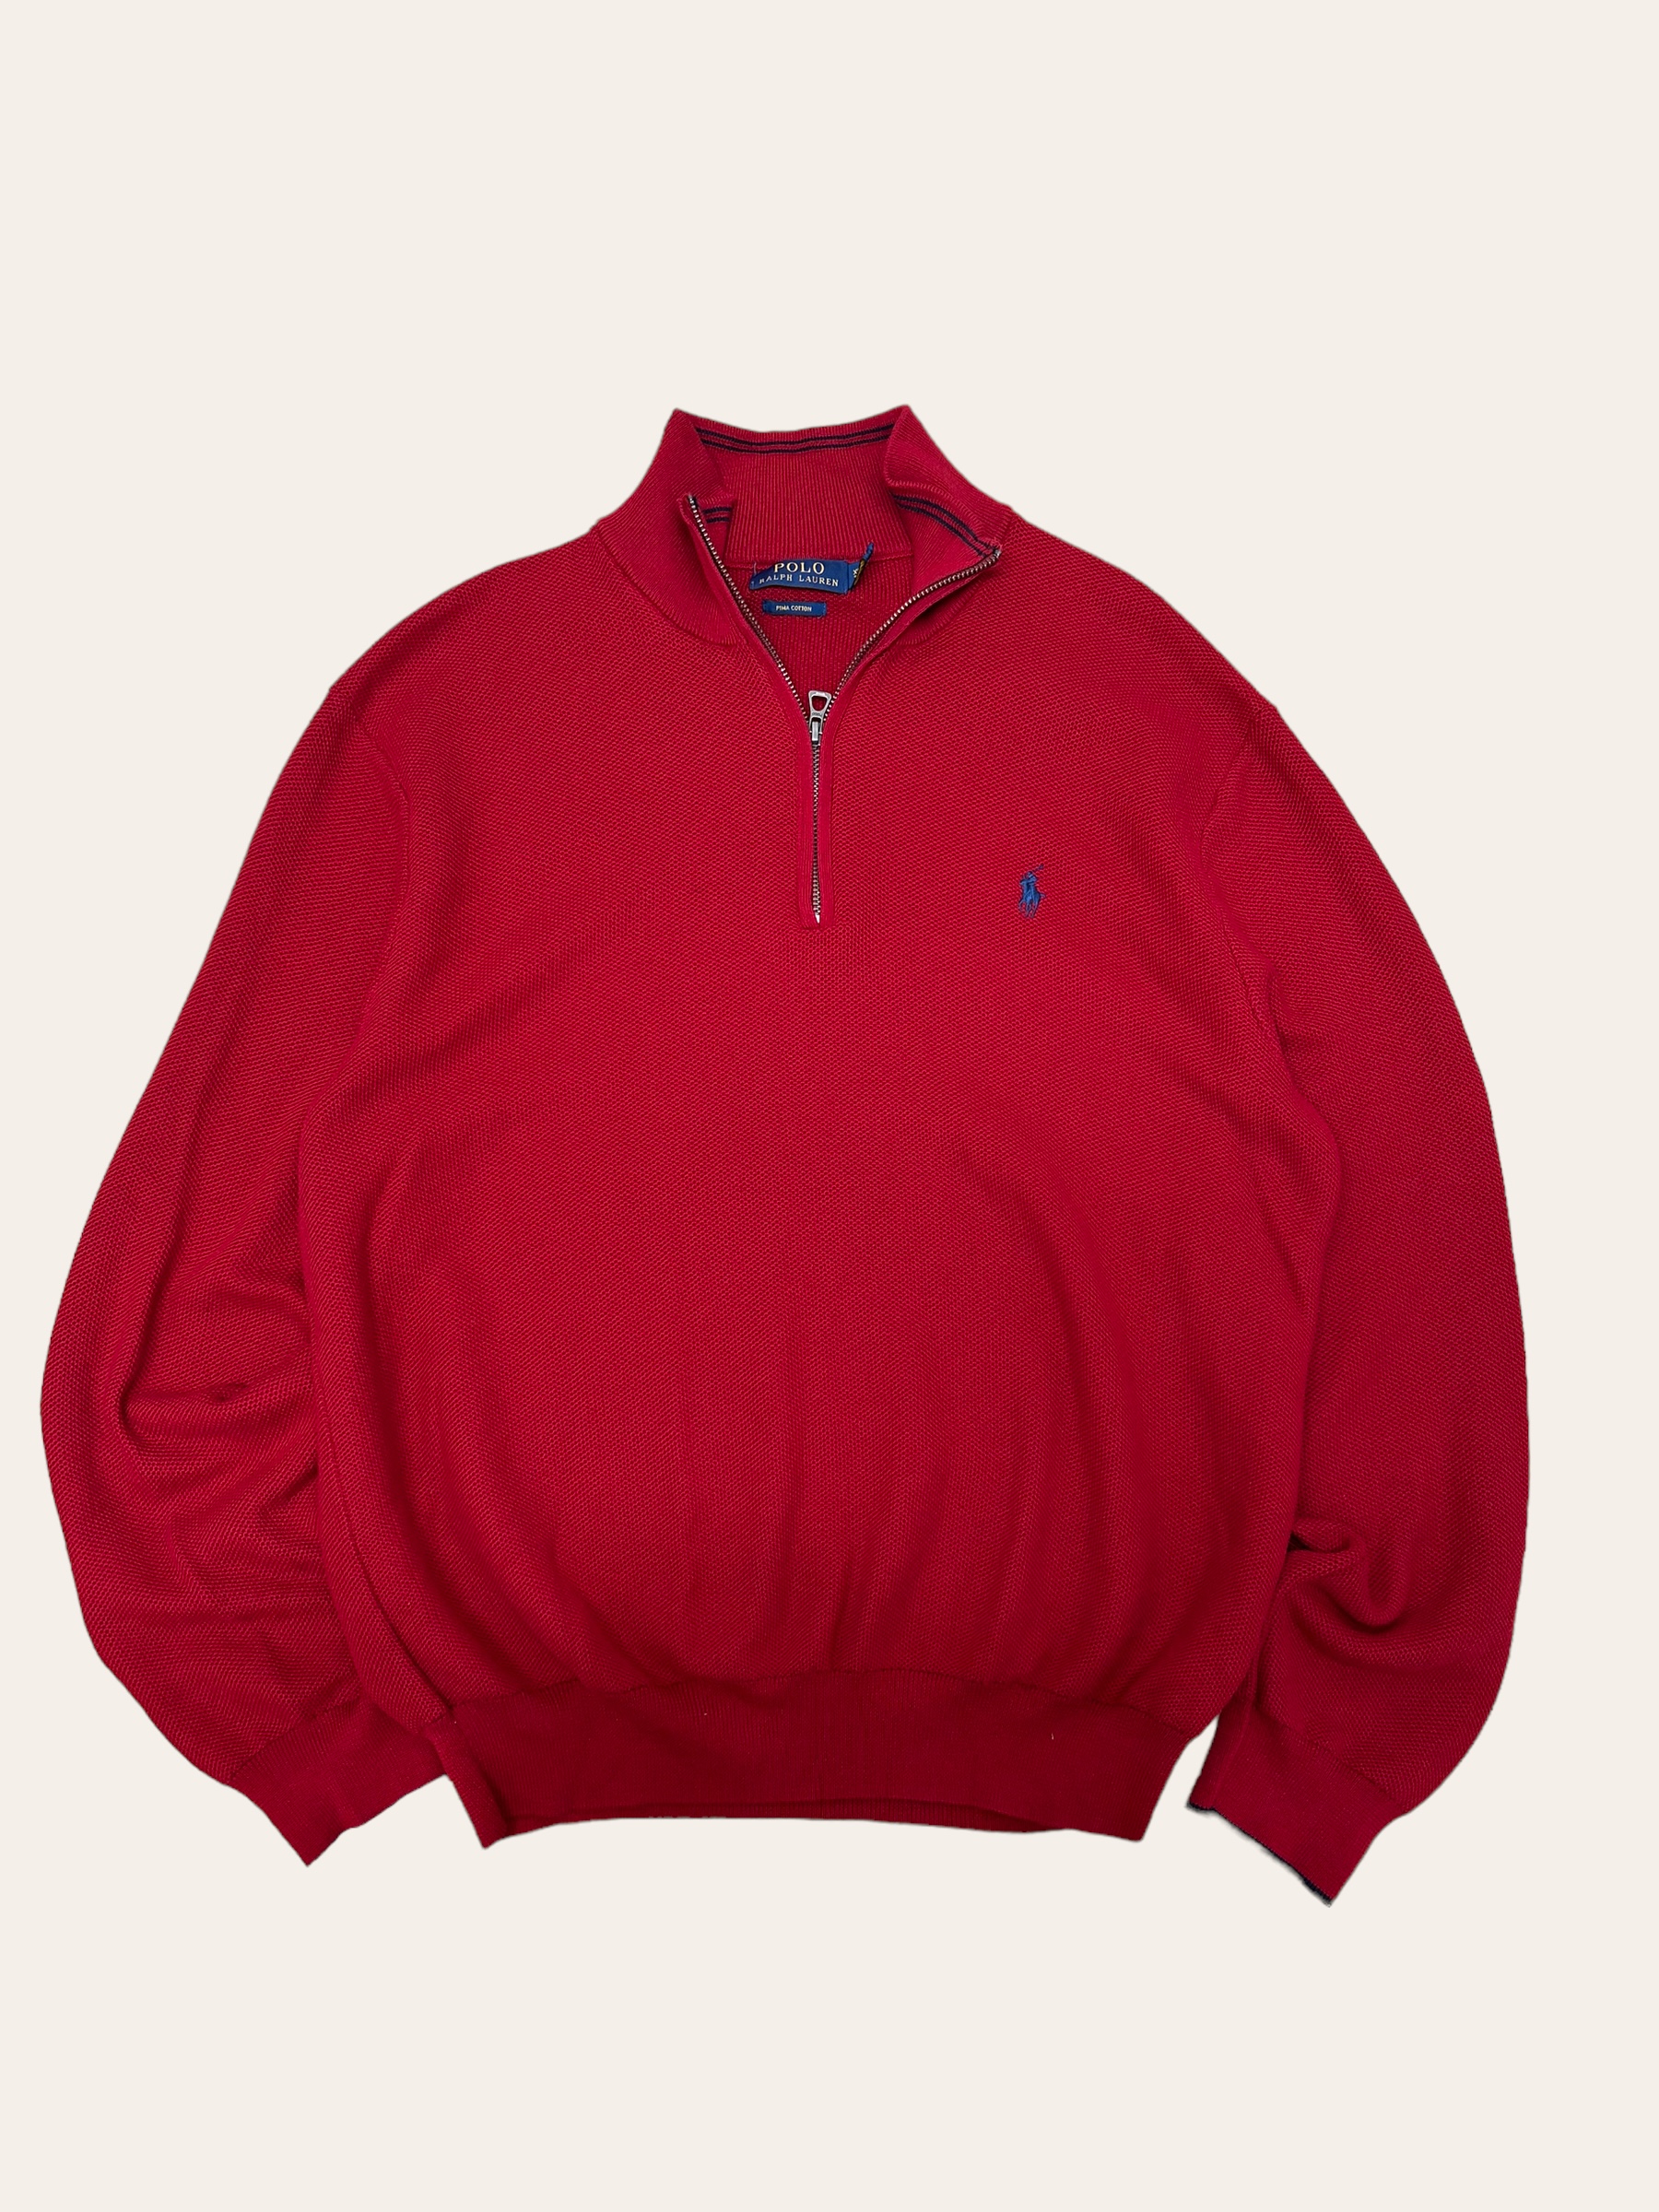 Polo ralph lauren red pima cotton pullover XL